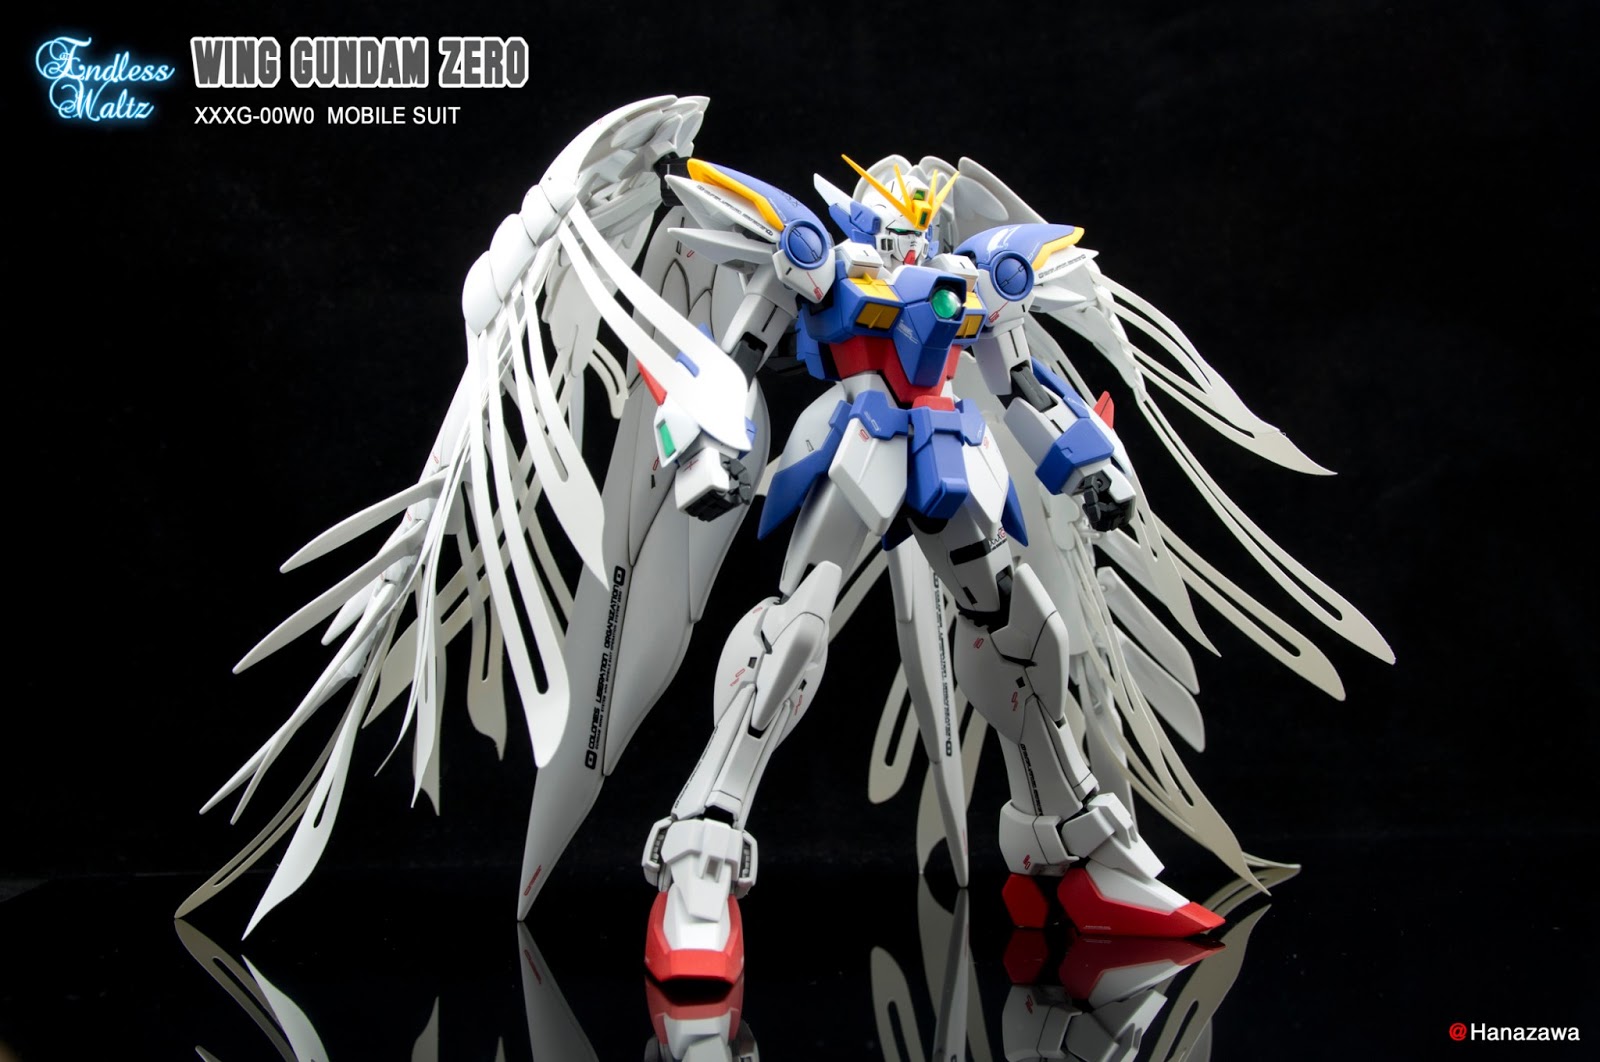 GUNDAM GUY: MG 1/100 XXXG-00W0 Wing Gundam Zero Custom - Painted Build